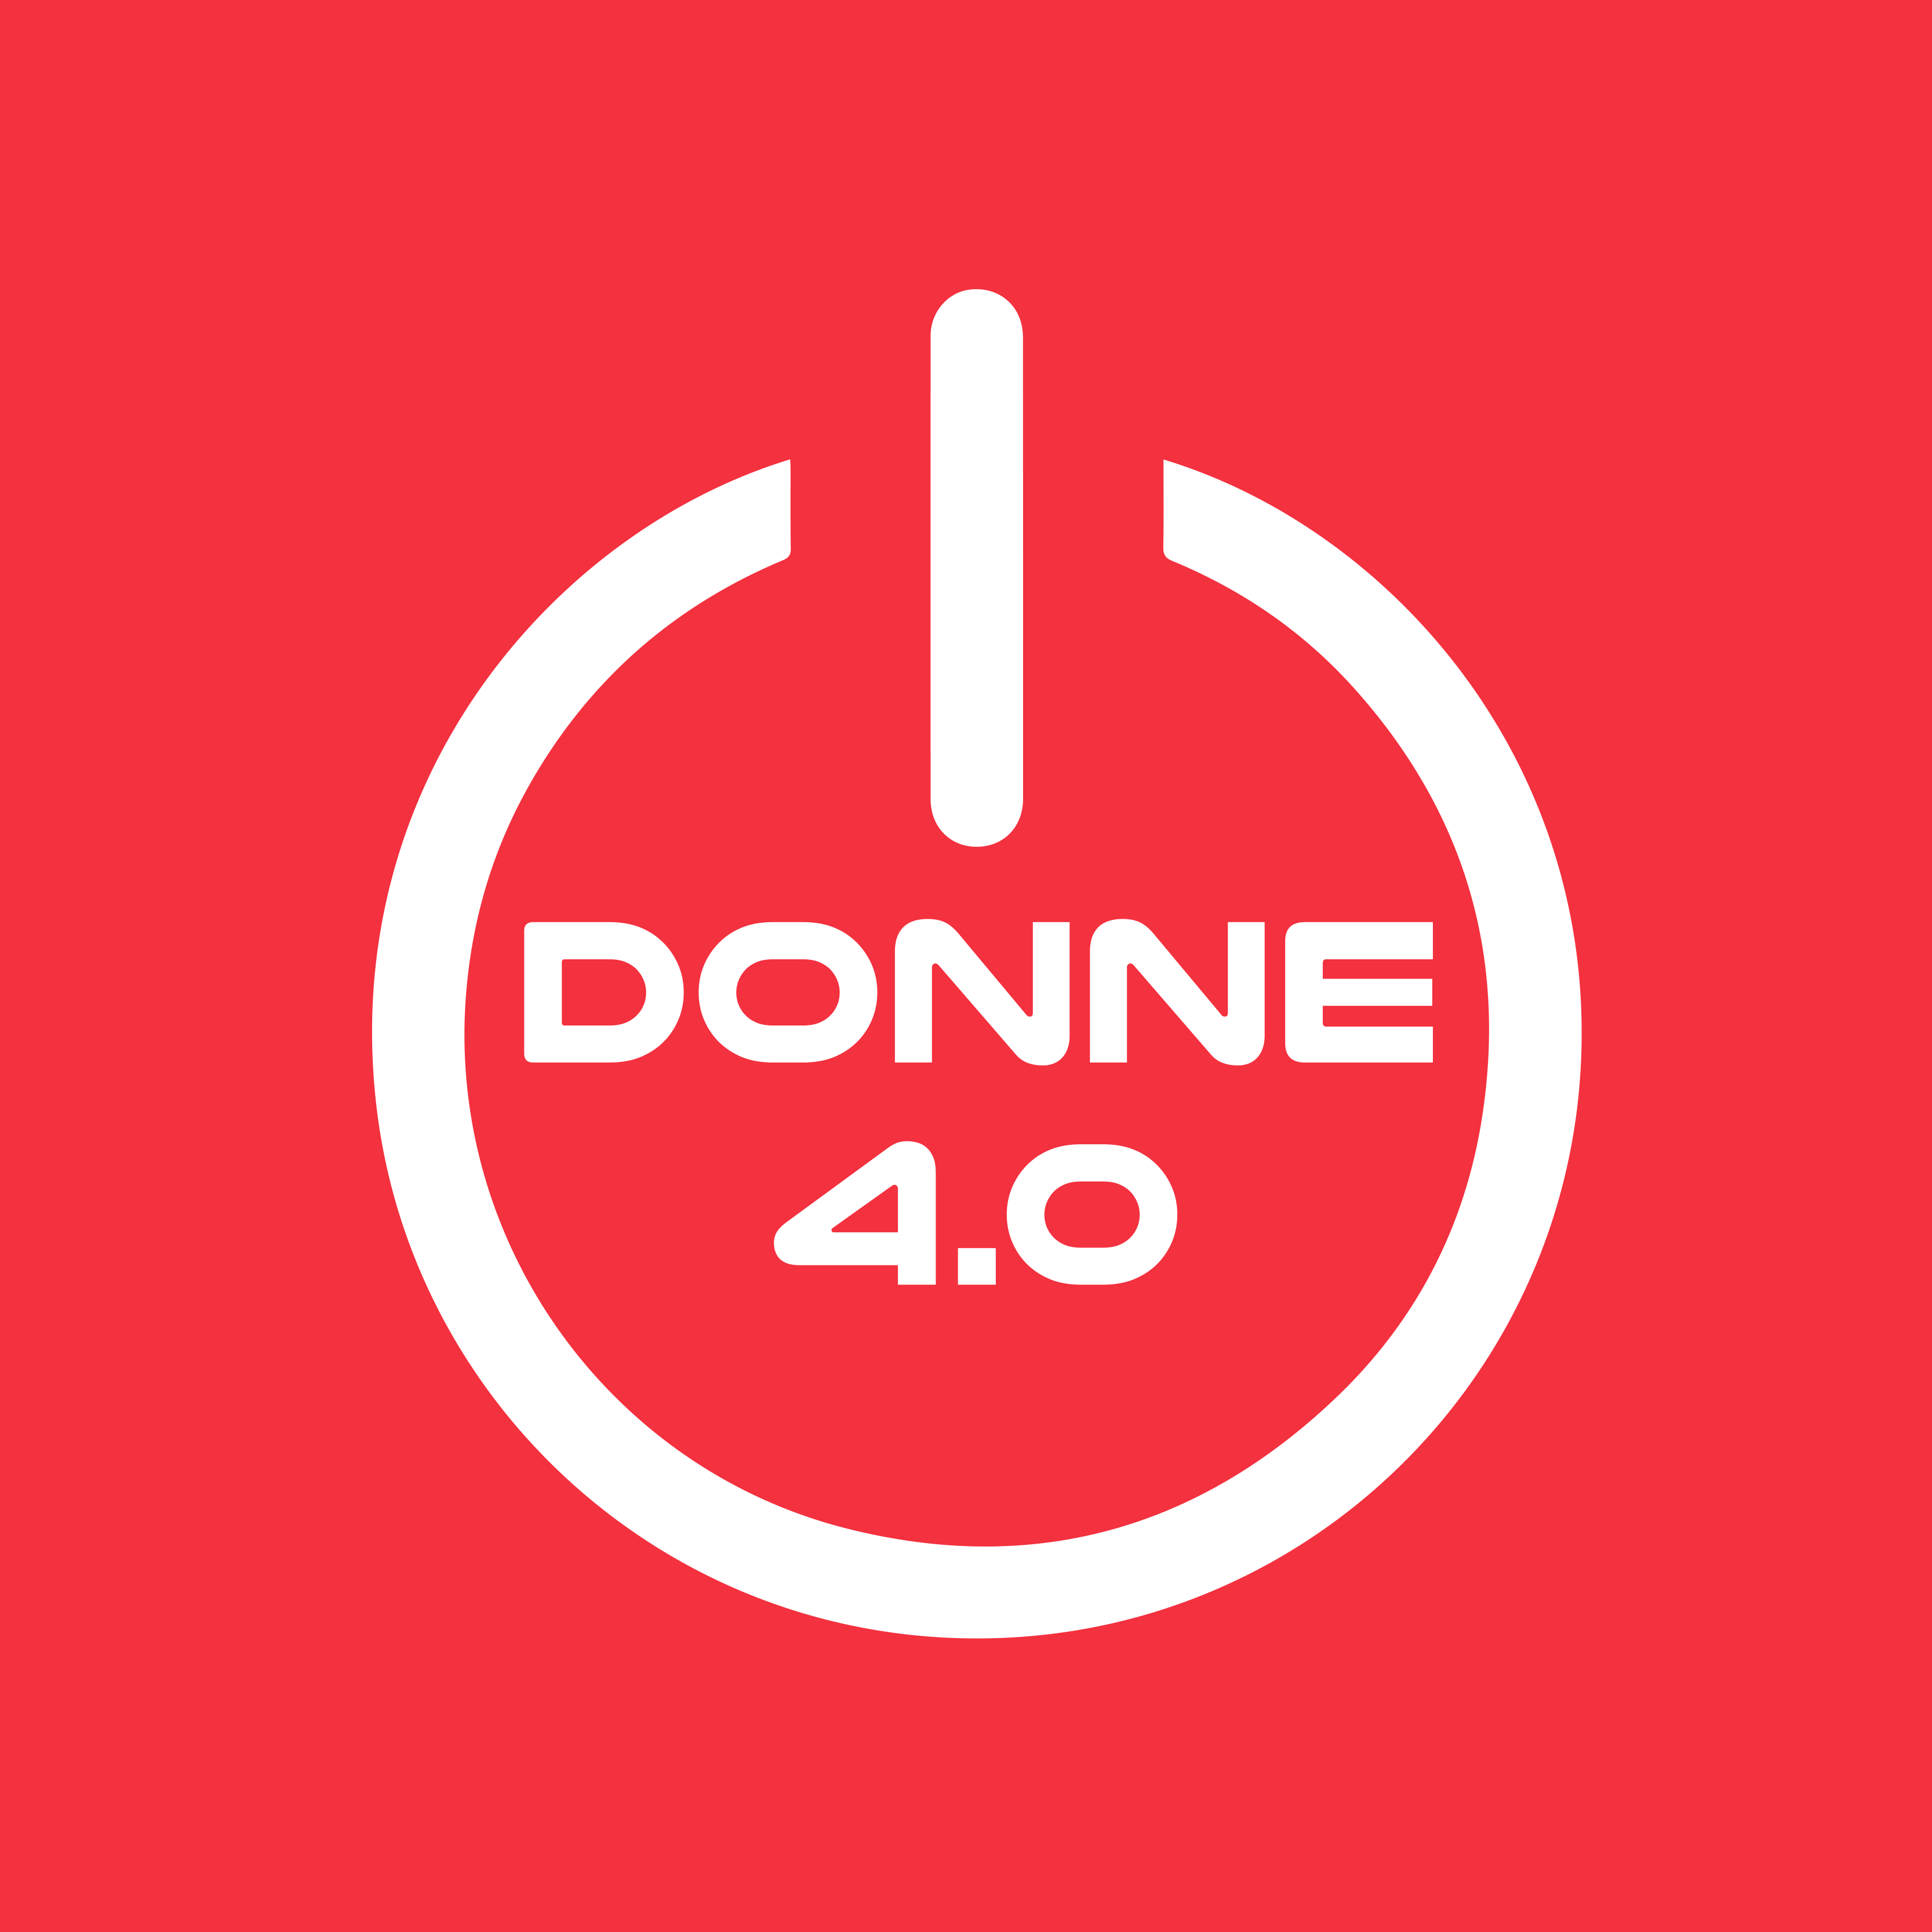 Donne 4.0 logo